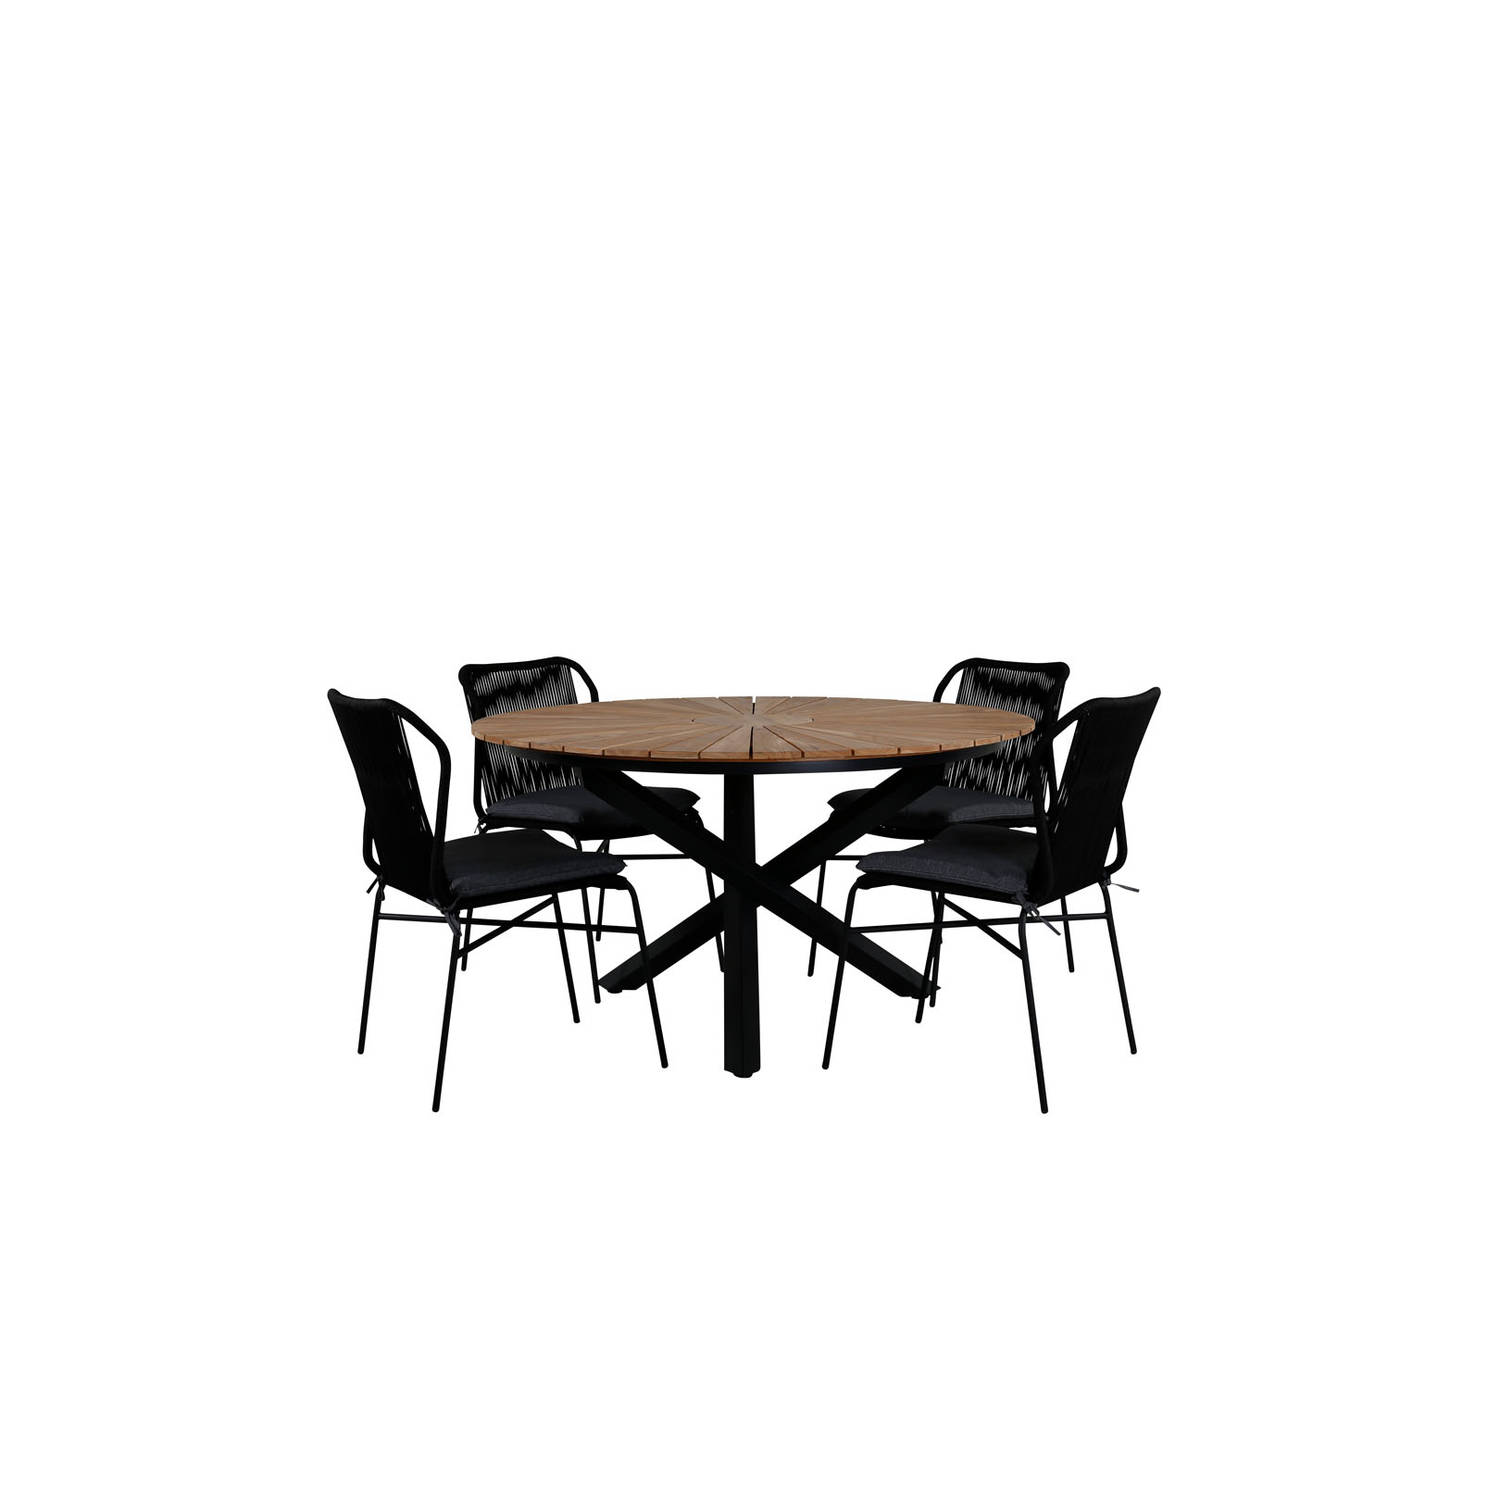 Mexico tuinmeubelset tafel Ø140cm en 4 stoel Julian zwart, naturel.